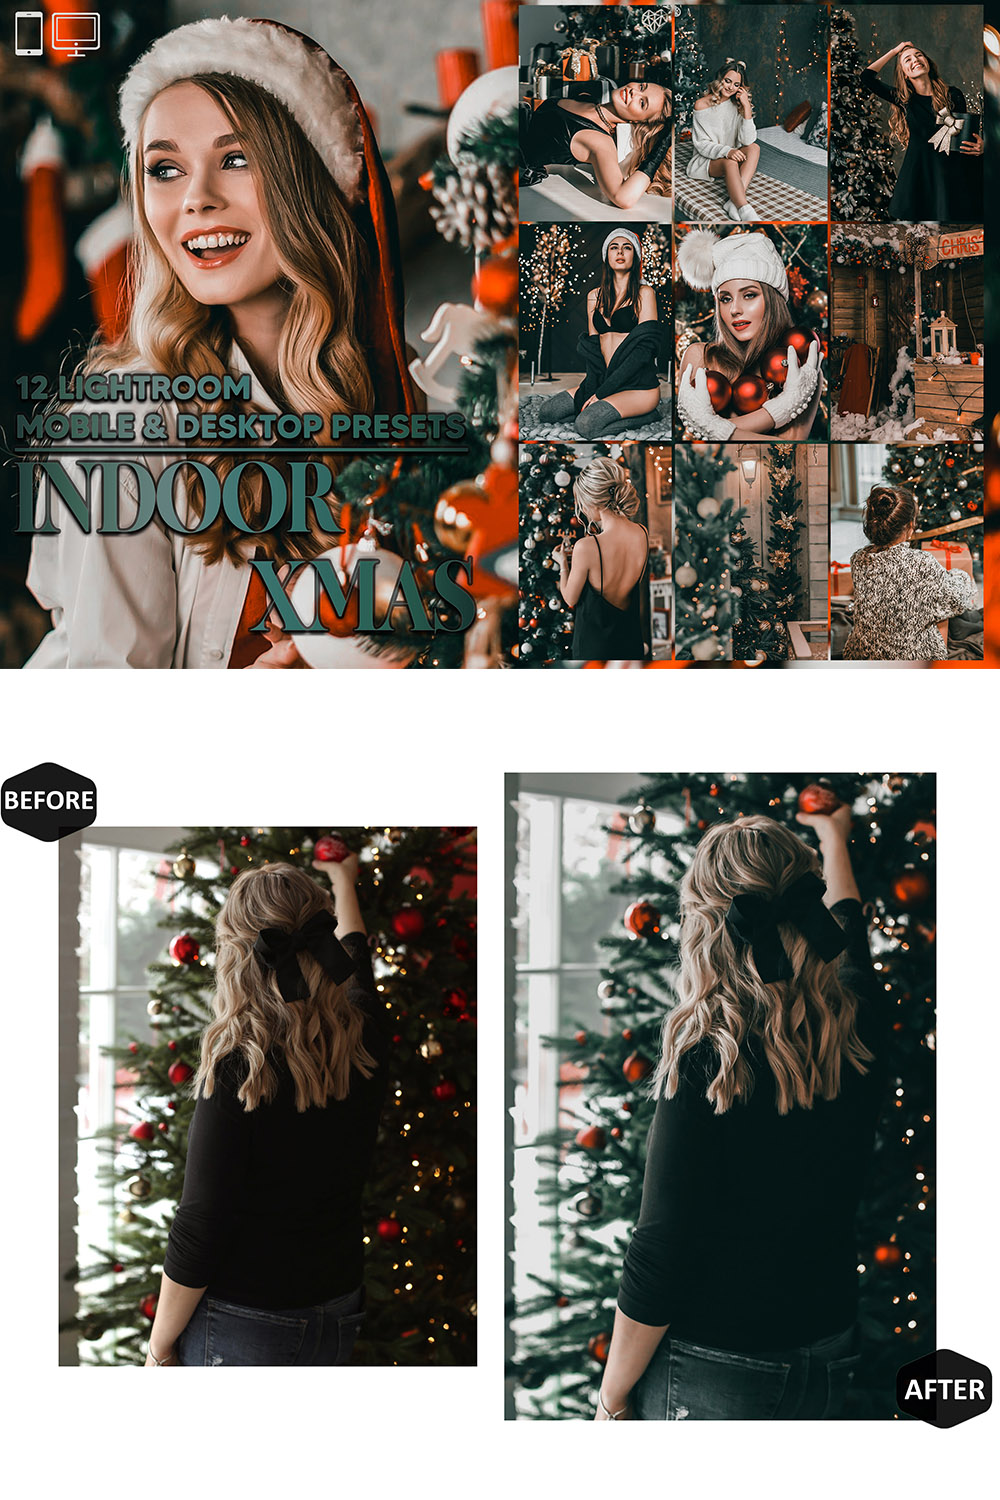 12 Indoor Xmas Lightroom Presets, Holiday Mobile Preset, Moody Christmas Desktop LR Filter Scheme Lifestyle Theme For Portrait, Instagram pinterest preview image.